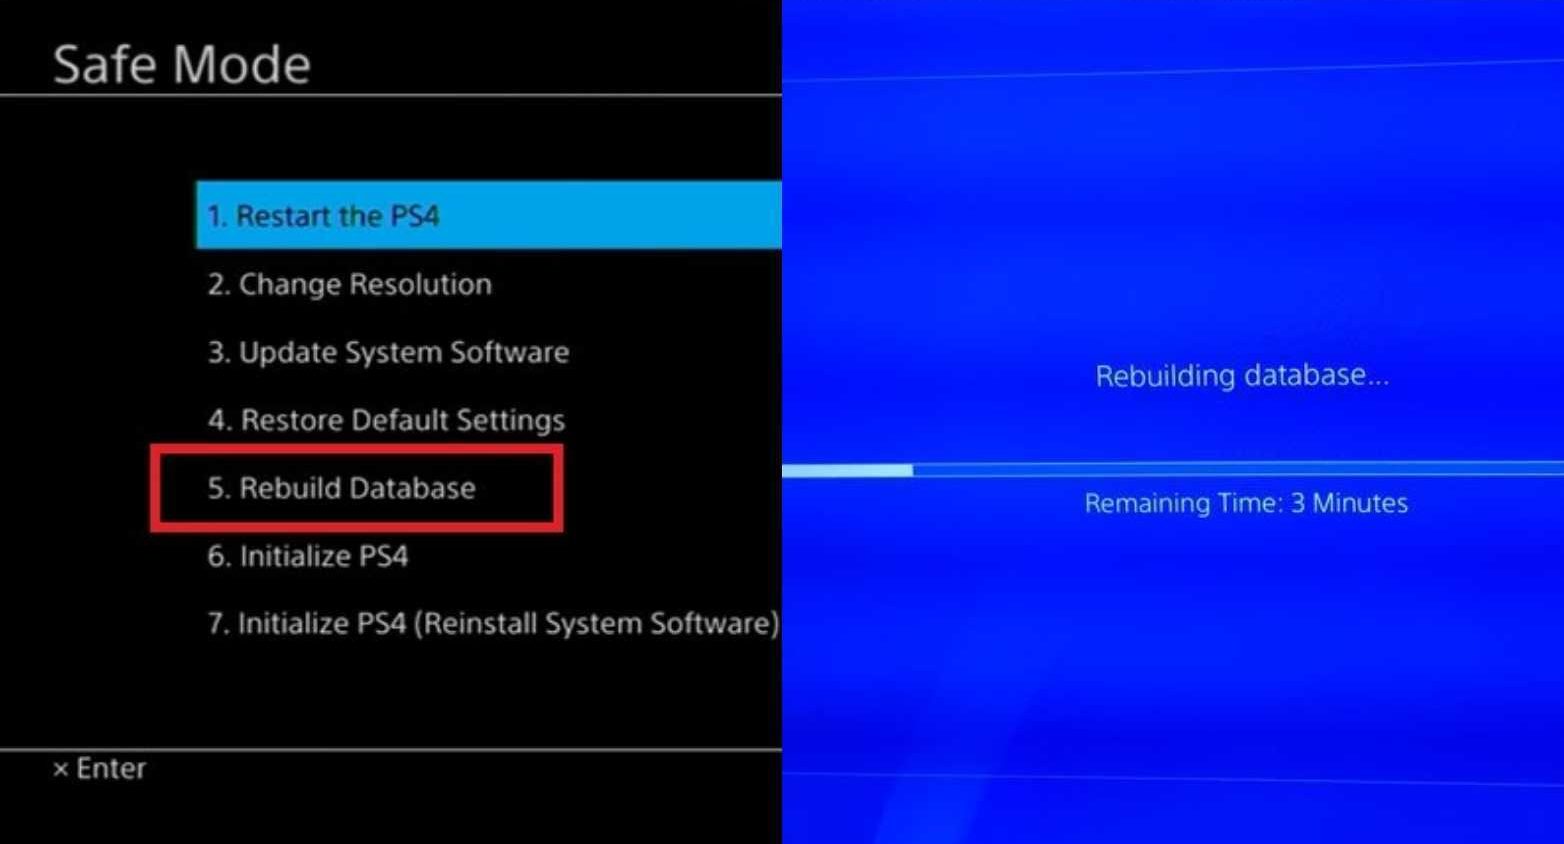 PS4 rebuild database